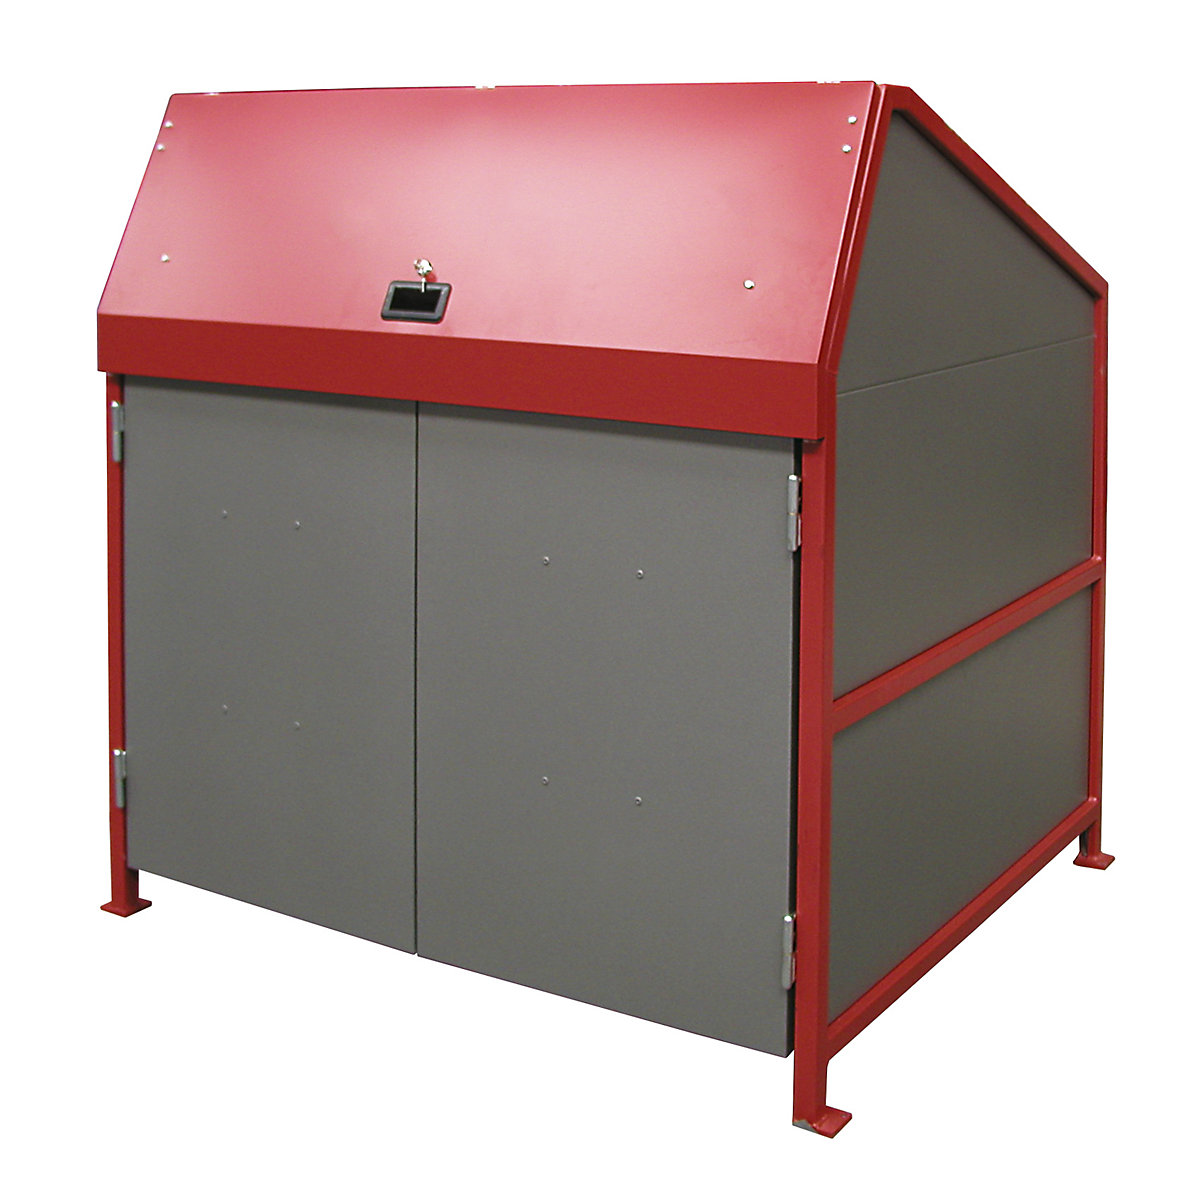 Waste bin enclosures – eurokraft pro, enclosed on 4 sides, with doors, frame in red